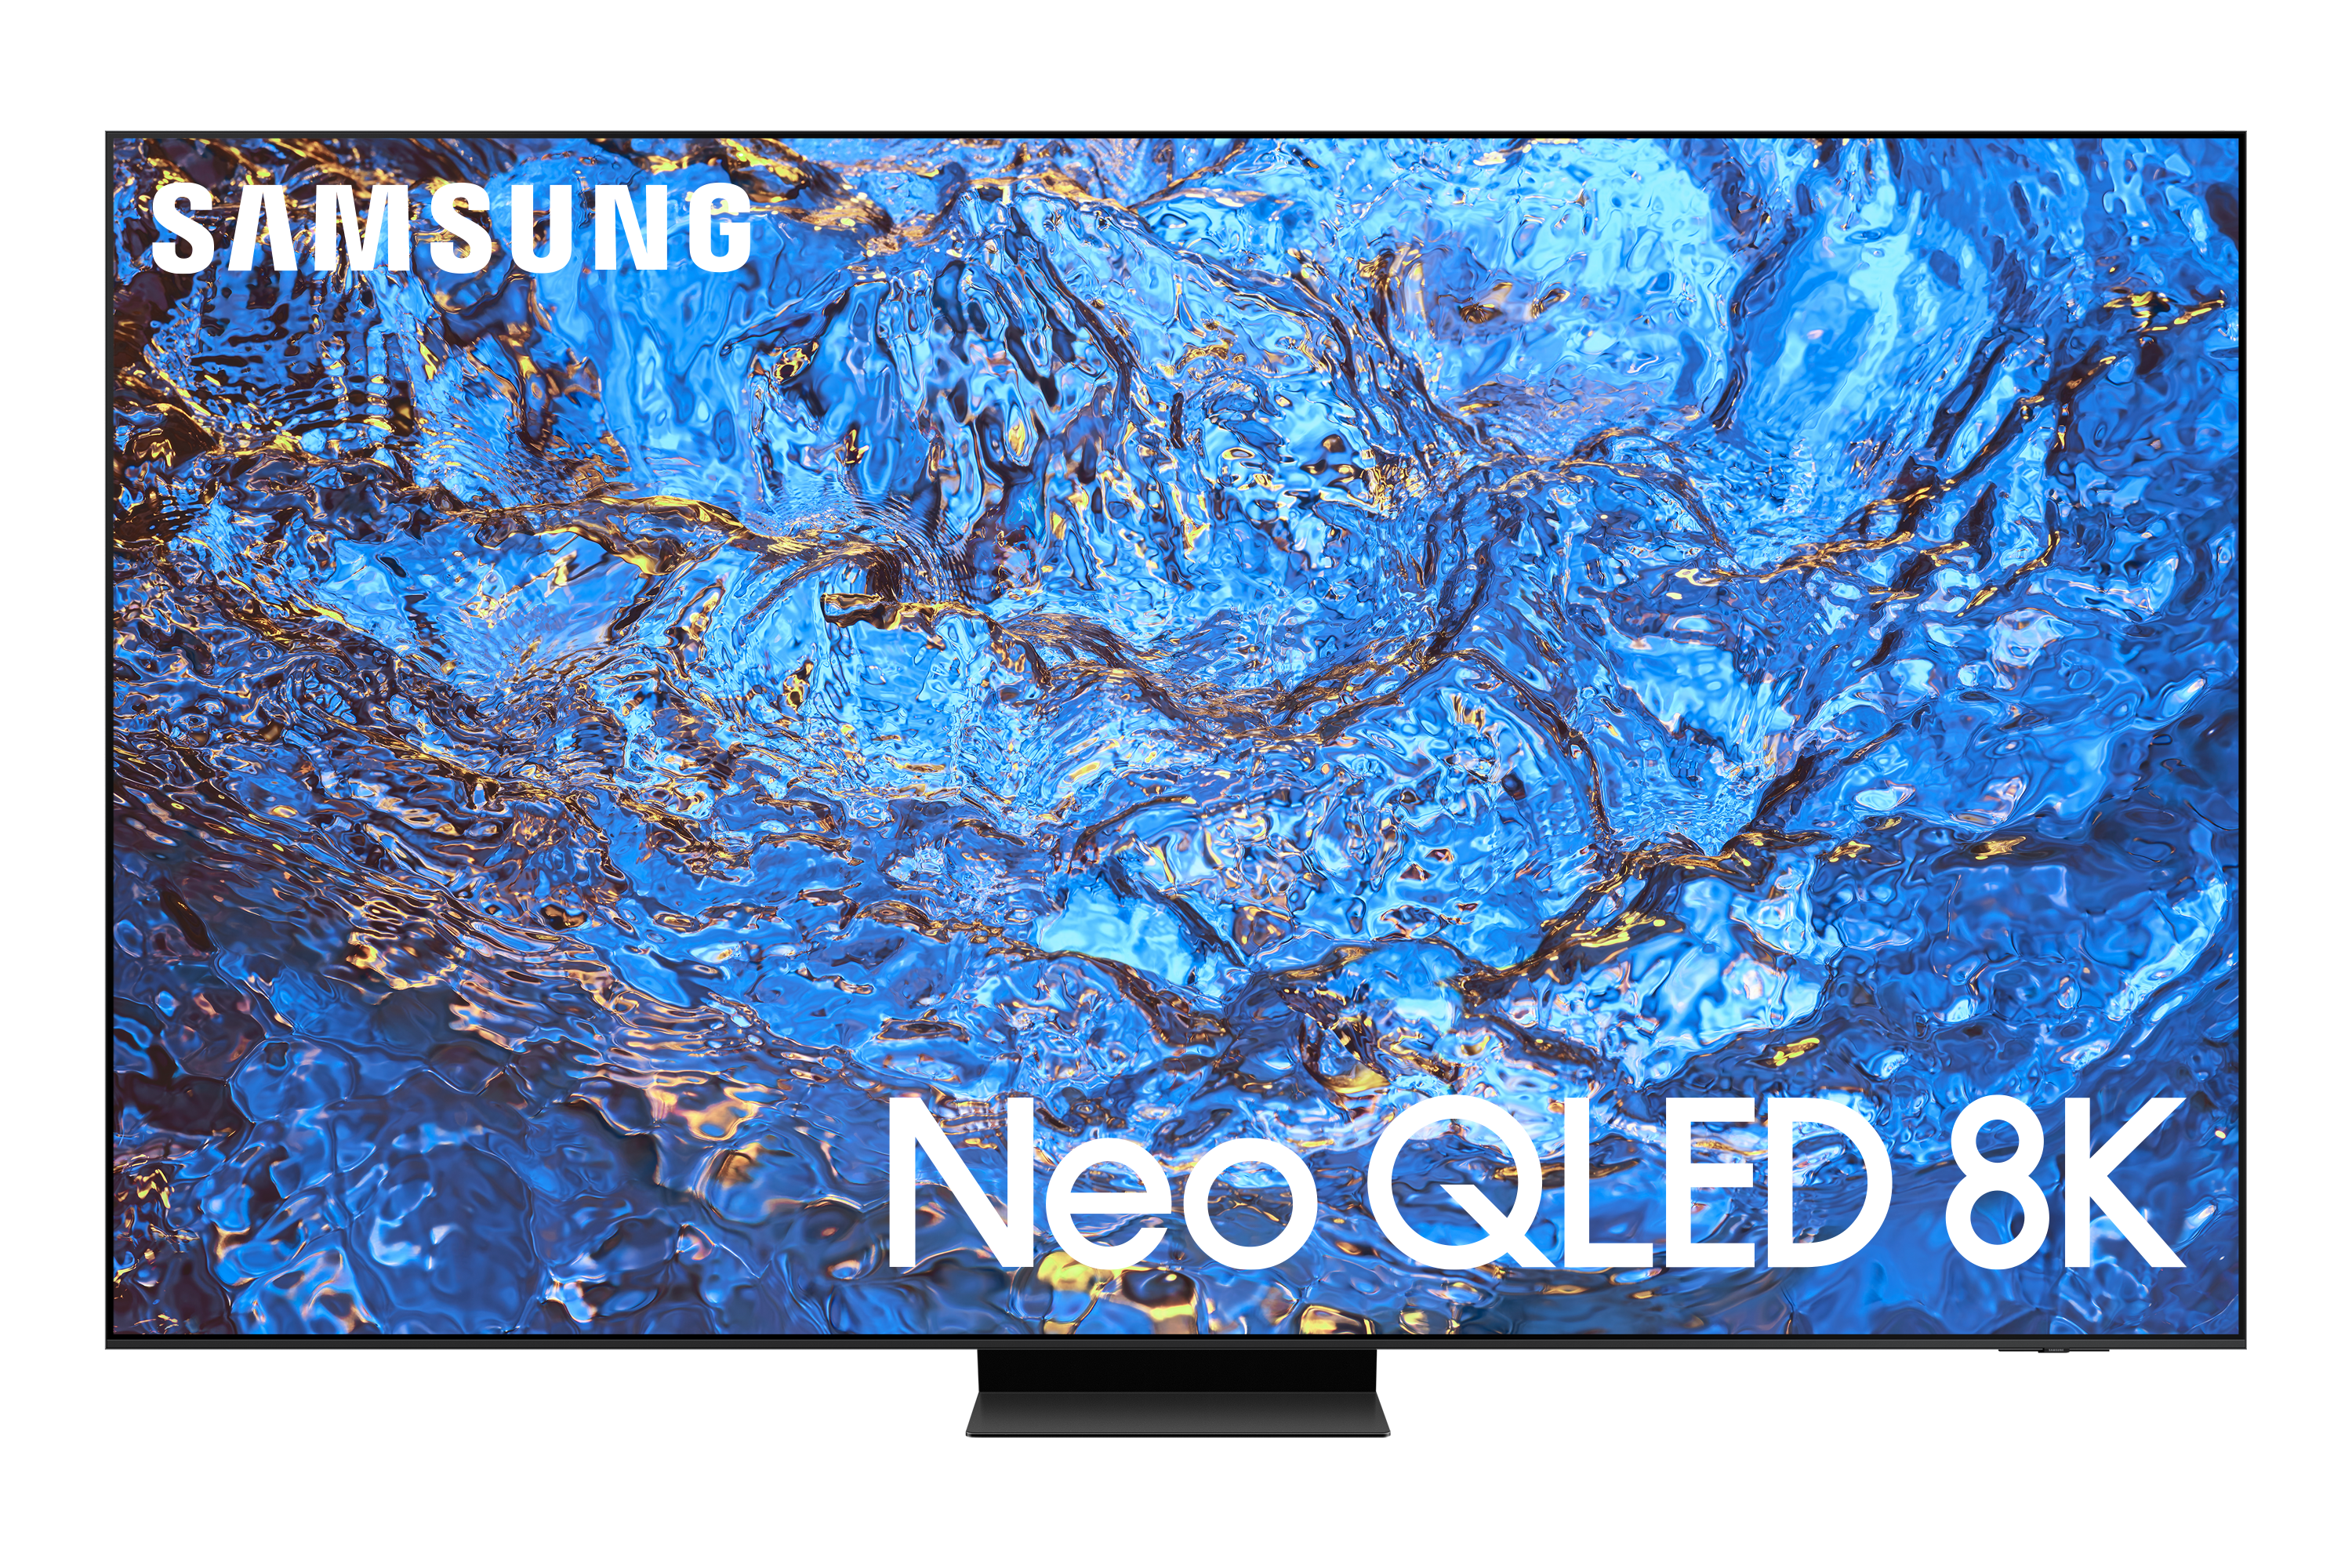 Samsung Debuts 98-Inch Class Neo QLED 8K TV at CEDIA